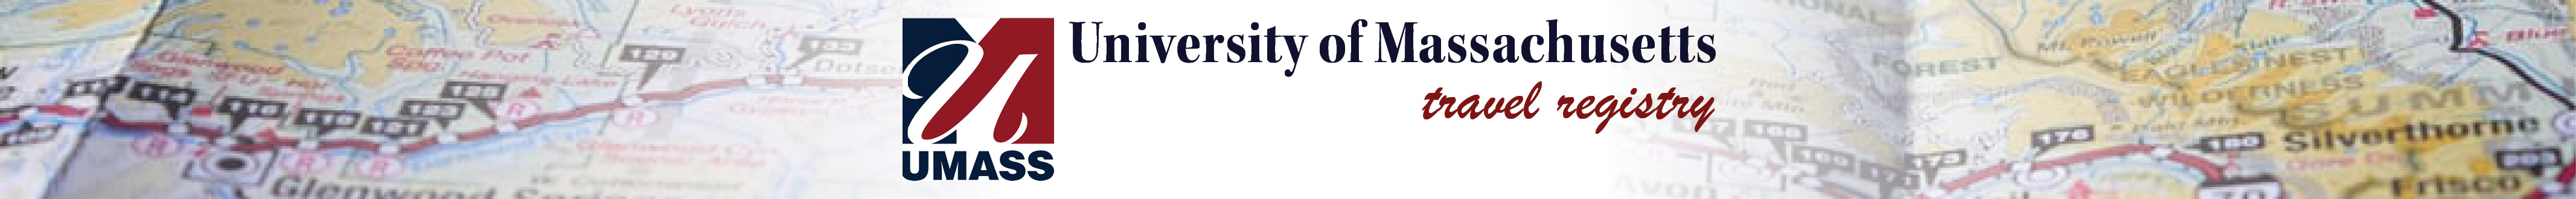 University of Massachusetts - University of Massachusetts